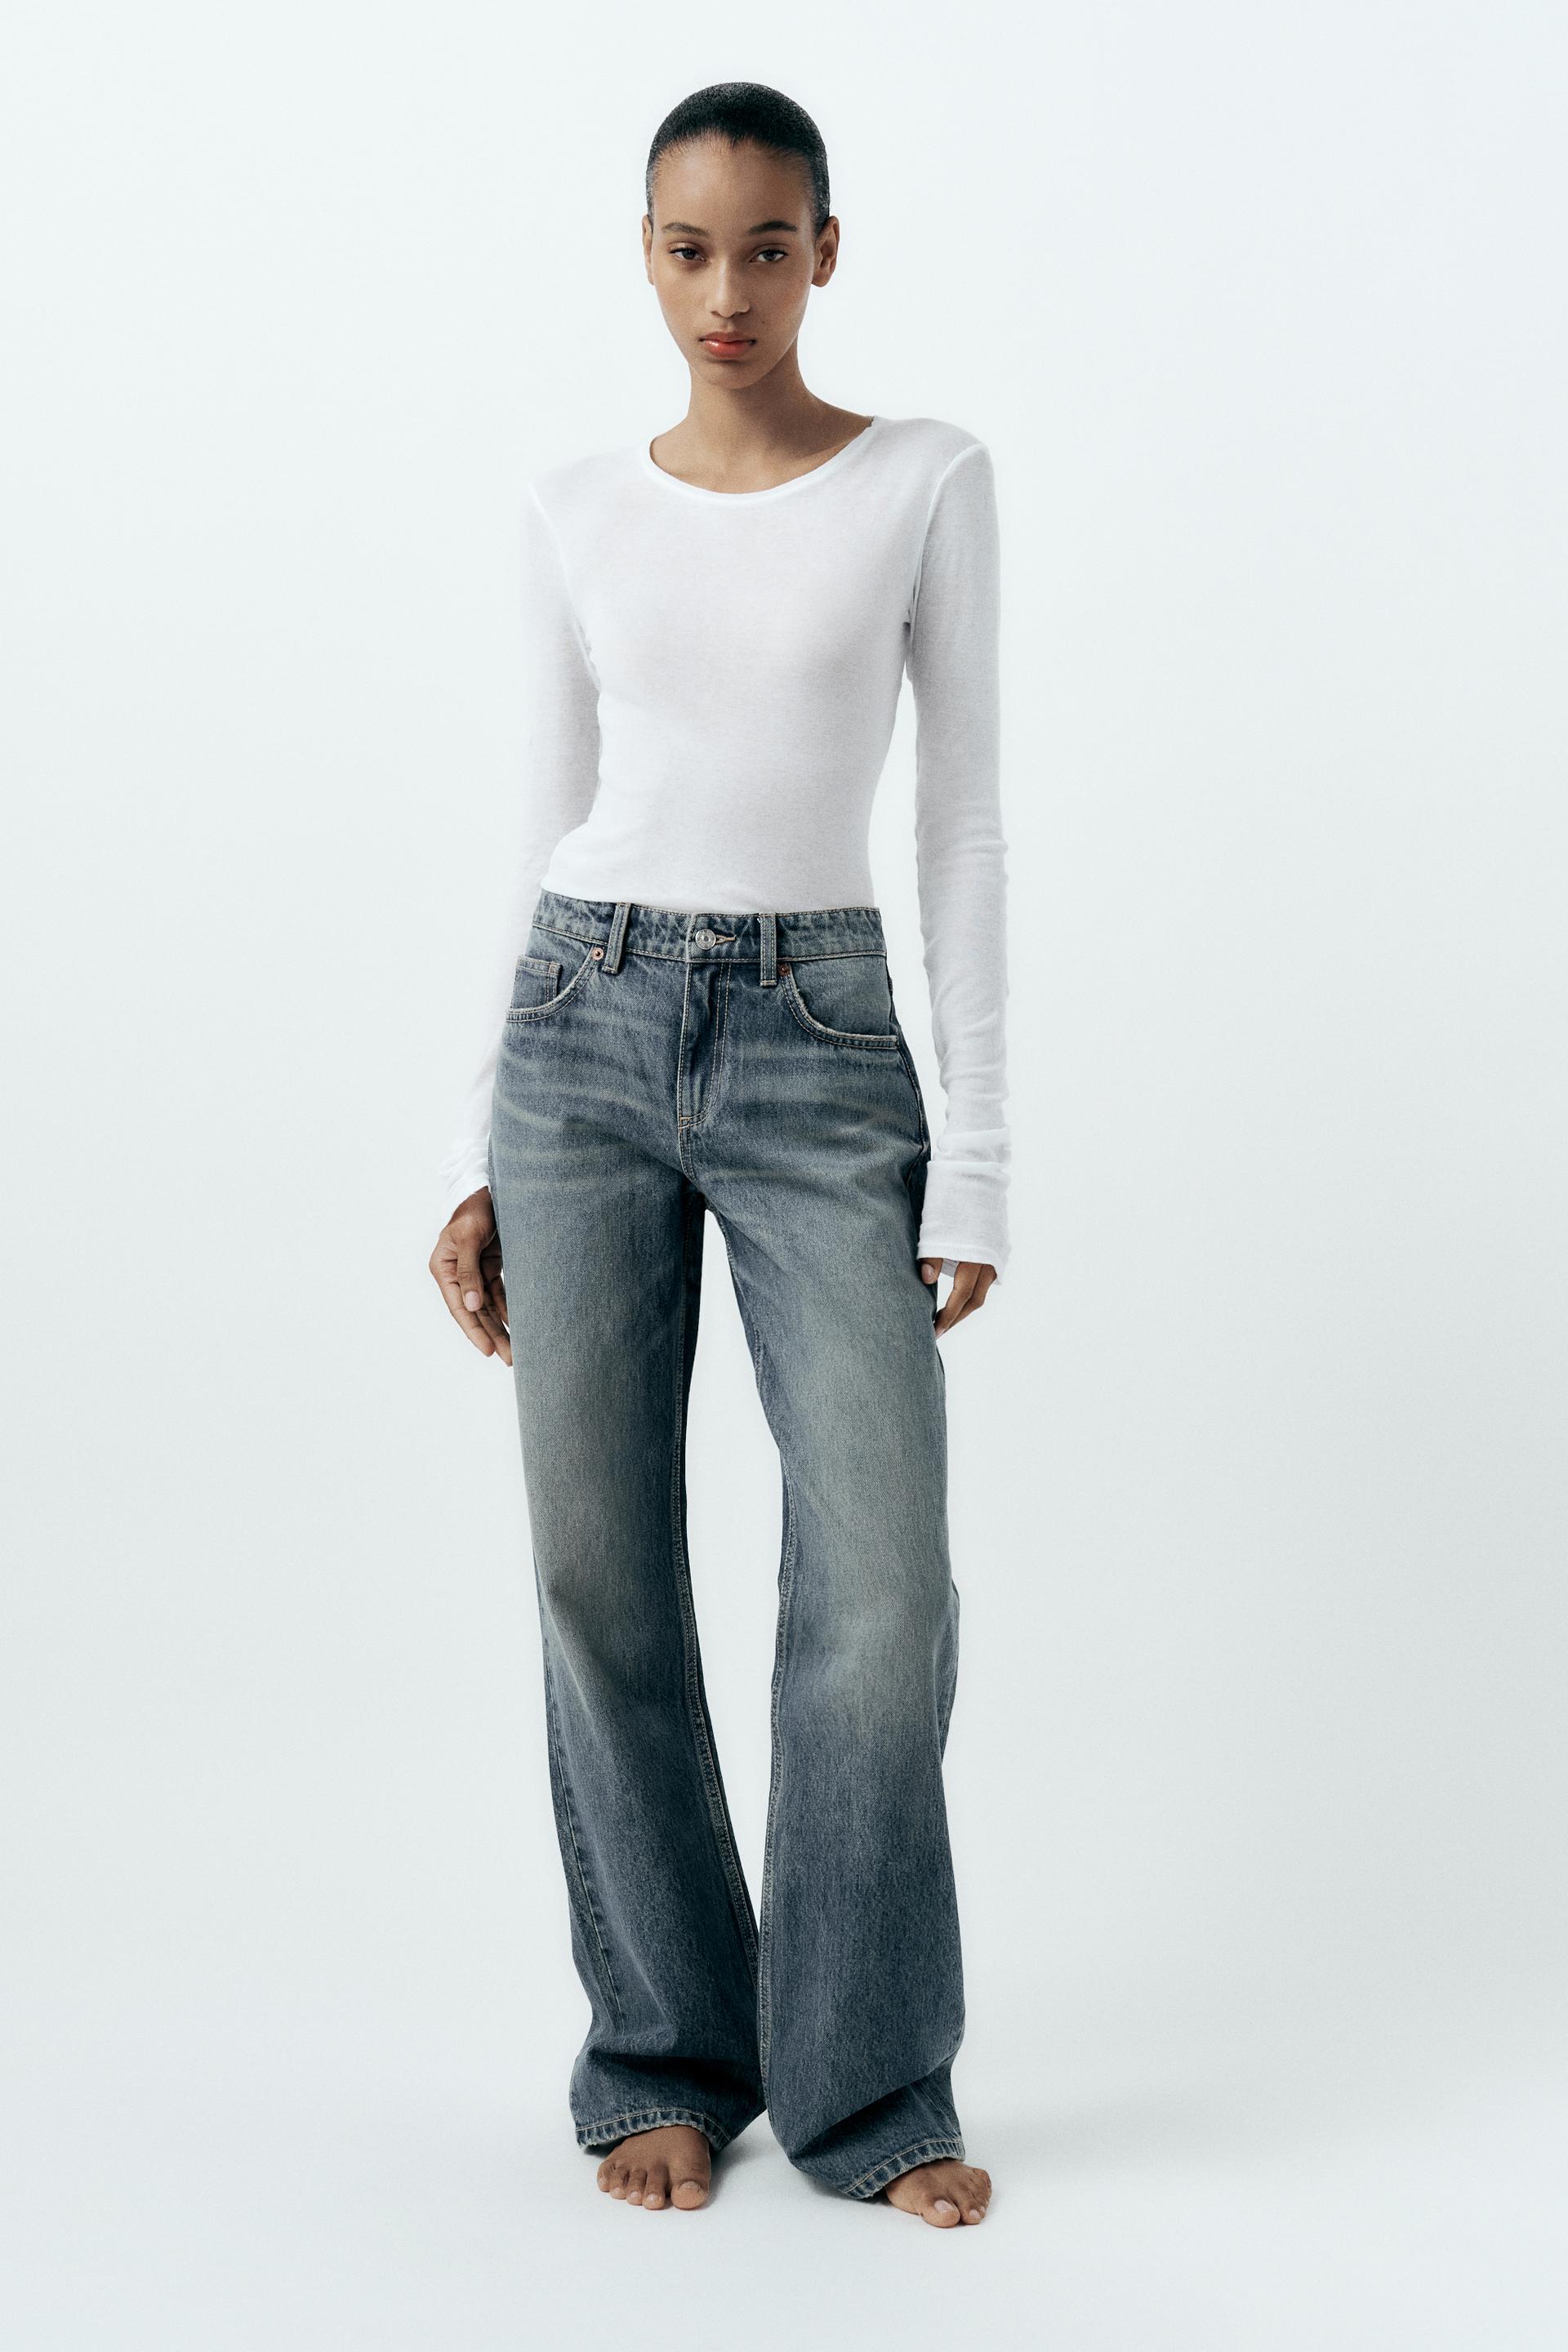 Zara High Rise Wide Leg Full Length Jeans, Women's Fashion